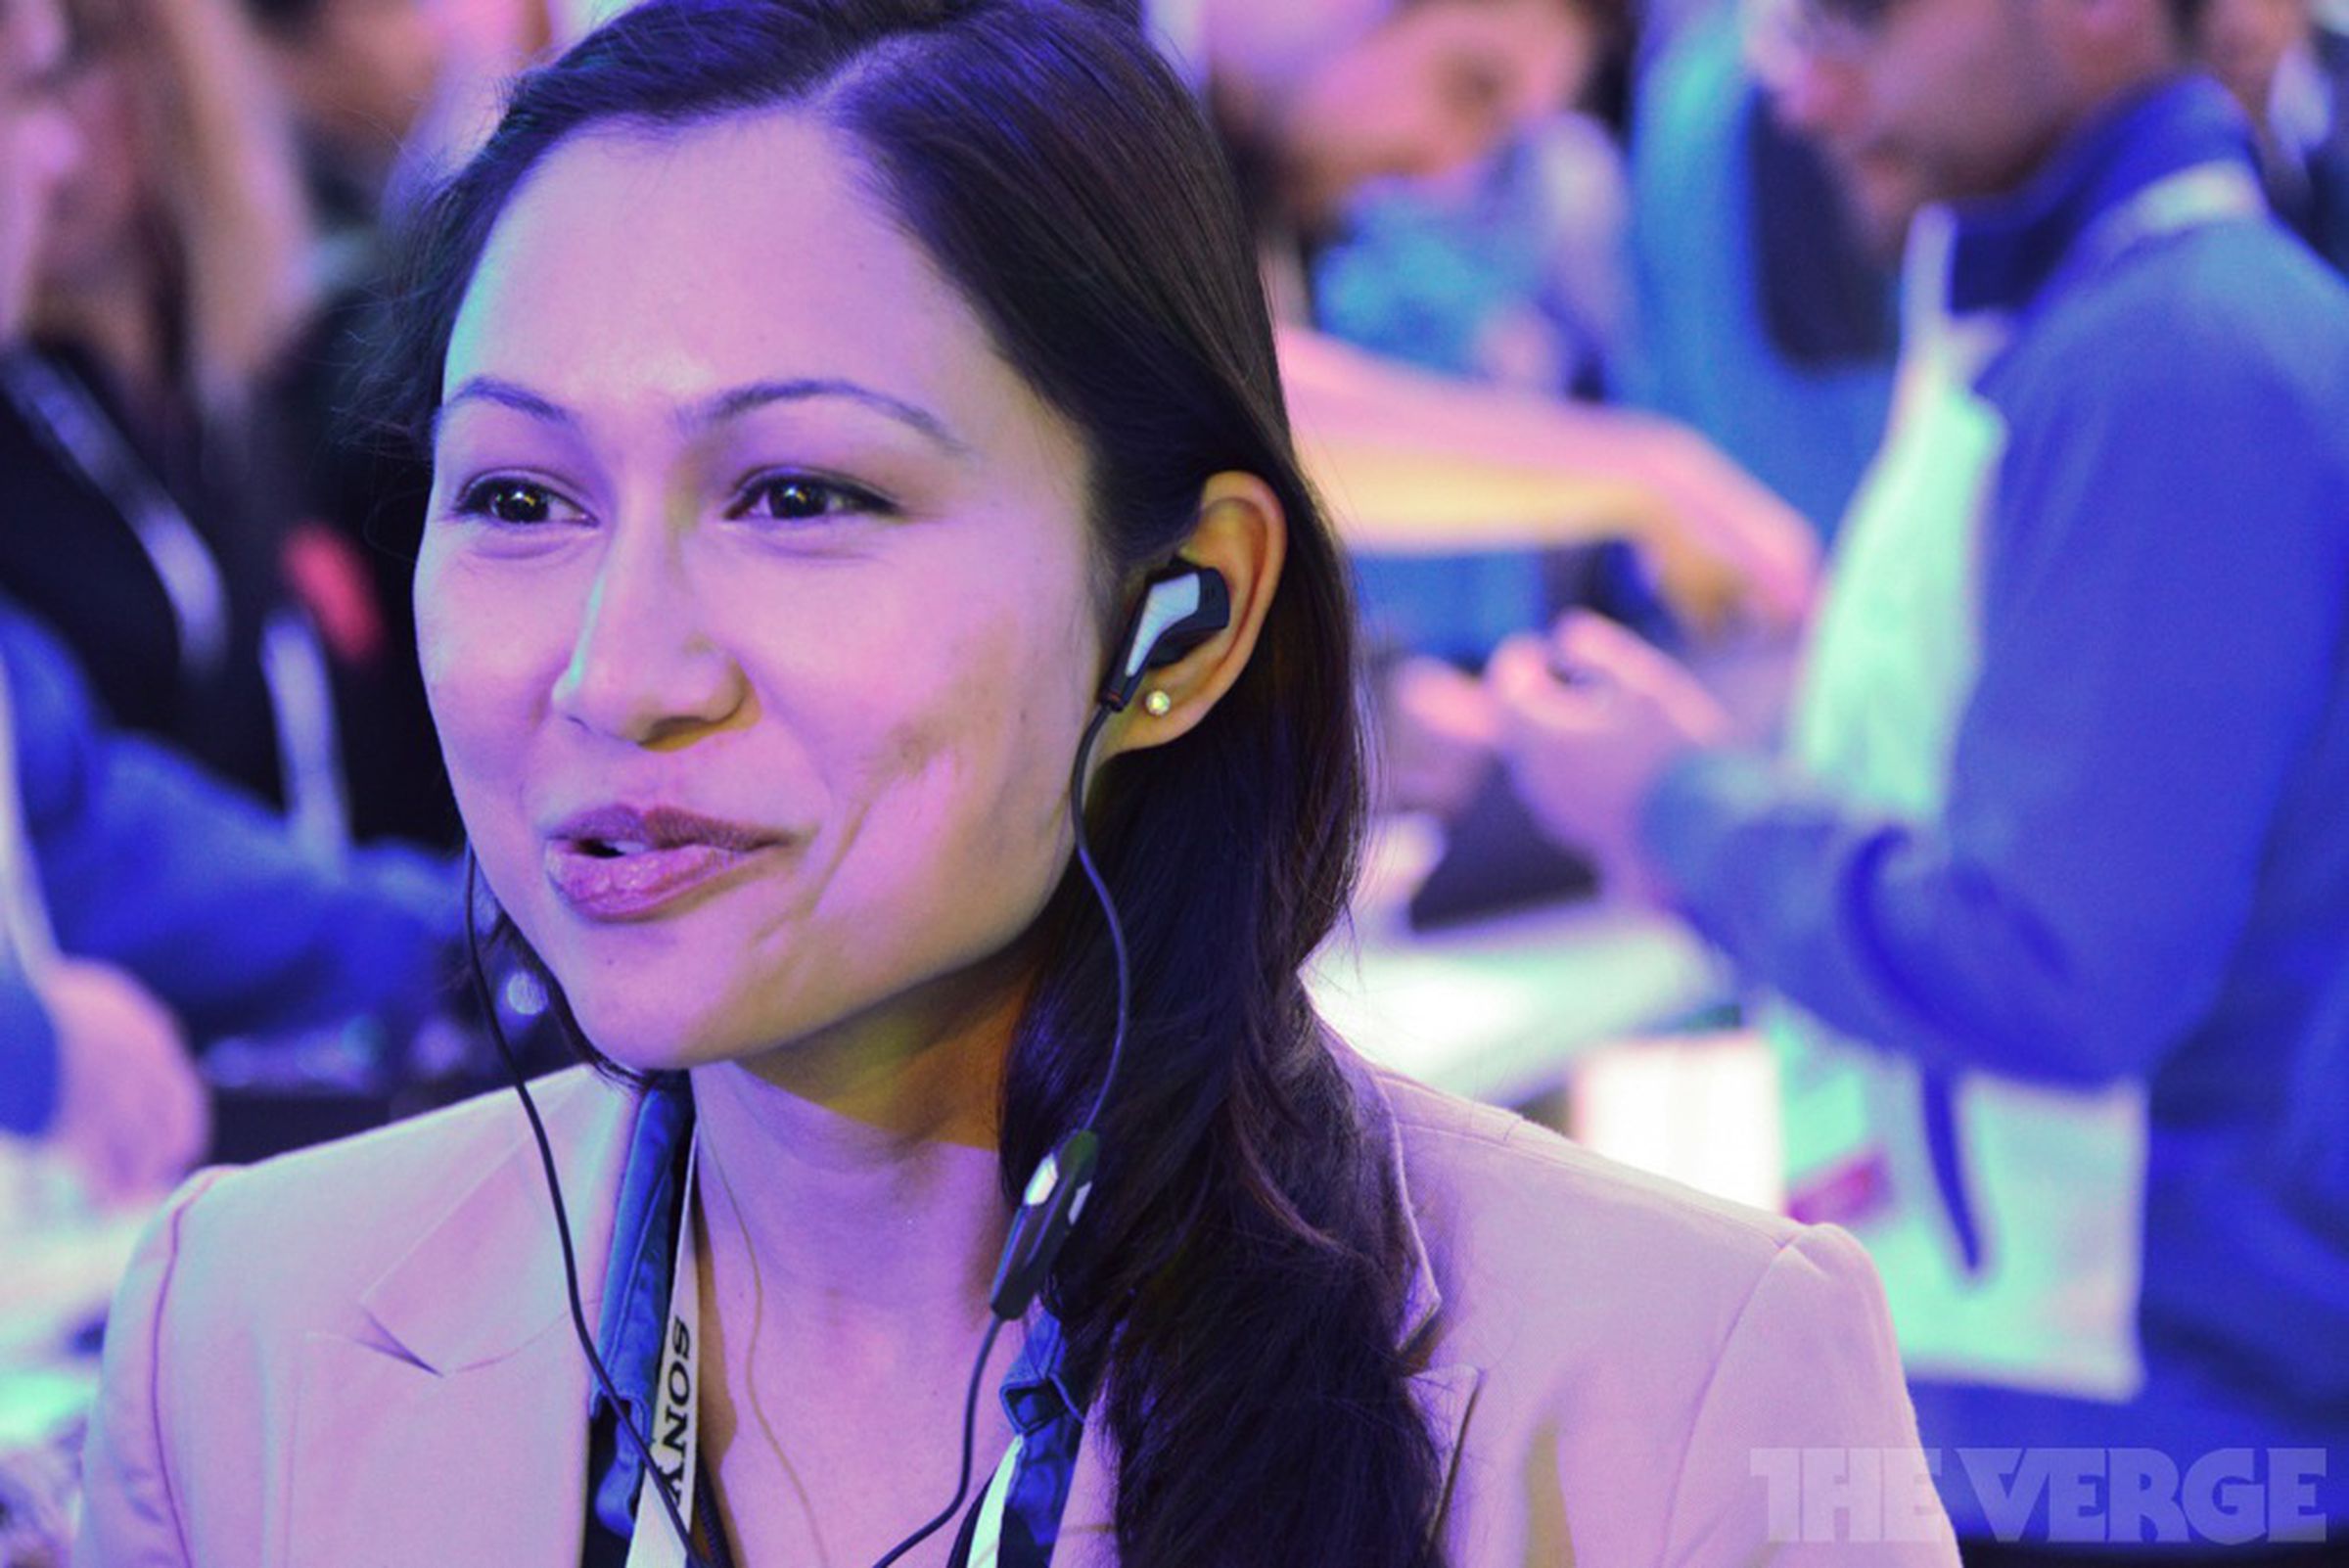 Intel Smart Earbuds hands-on photos